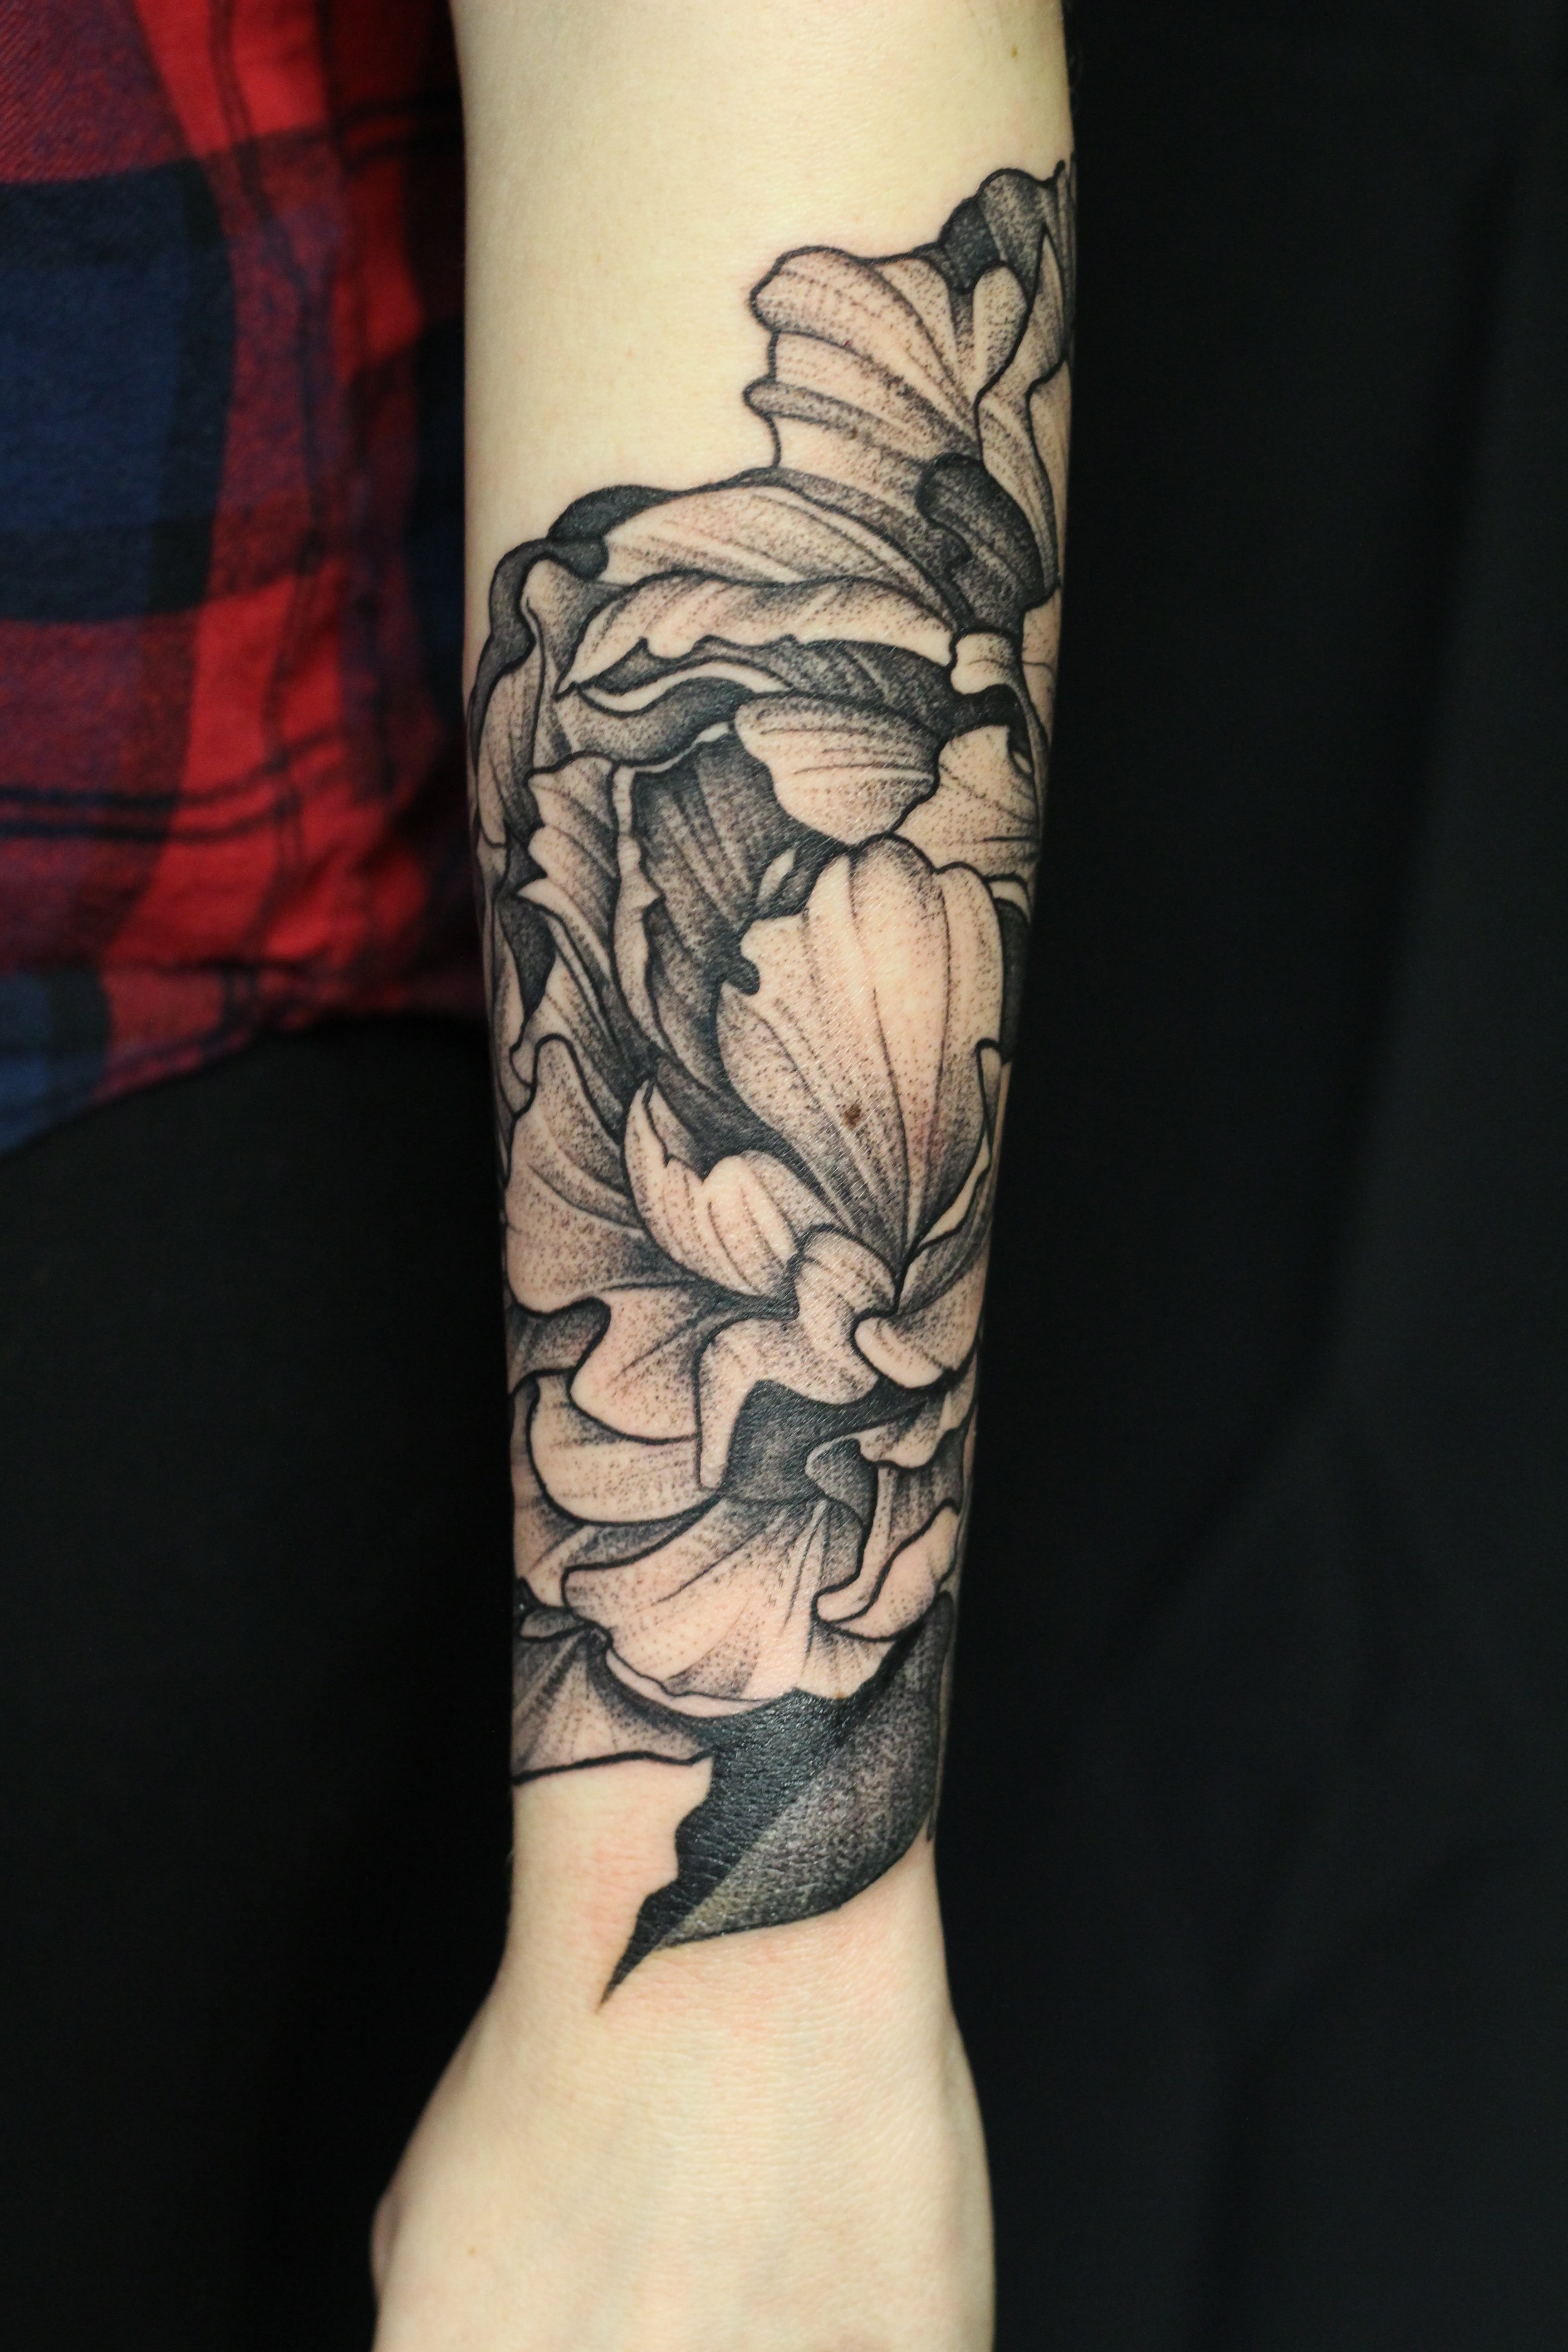 Meet Taylor Finn | Tattoo Artist (@ordinary.tattooer) - SHOUTOUT ARIZONA